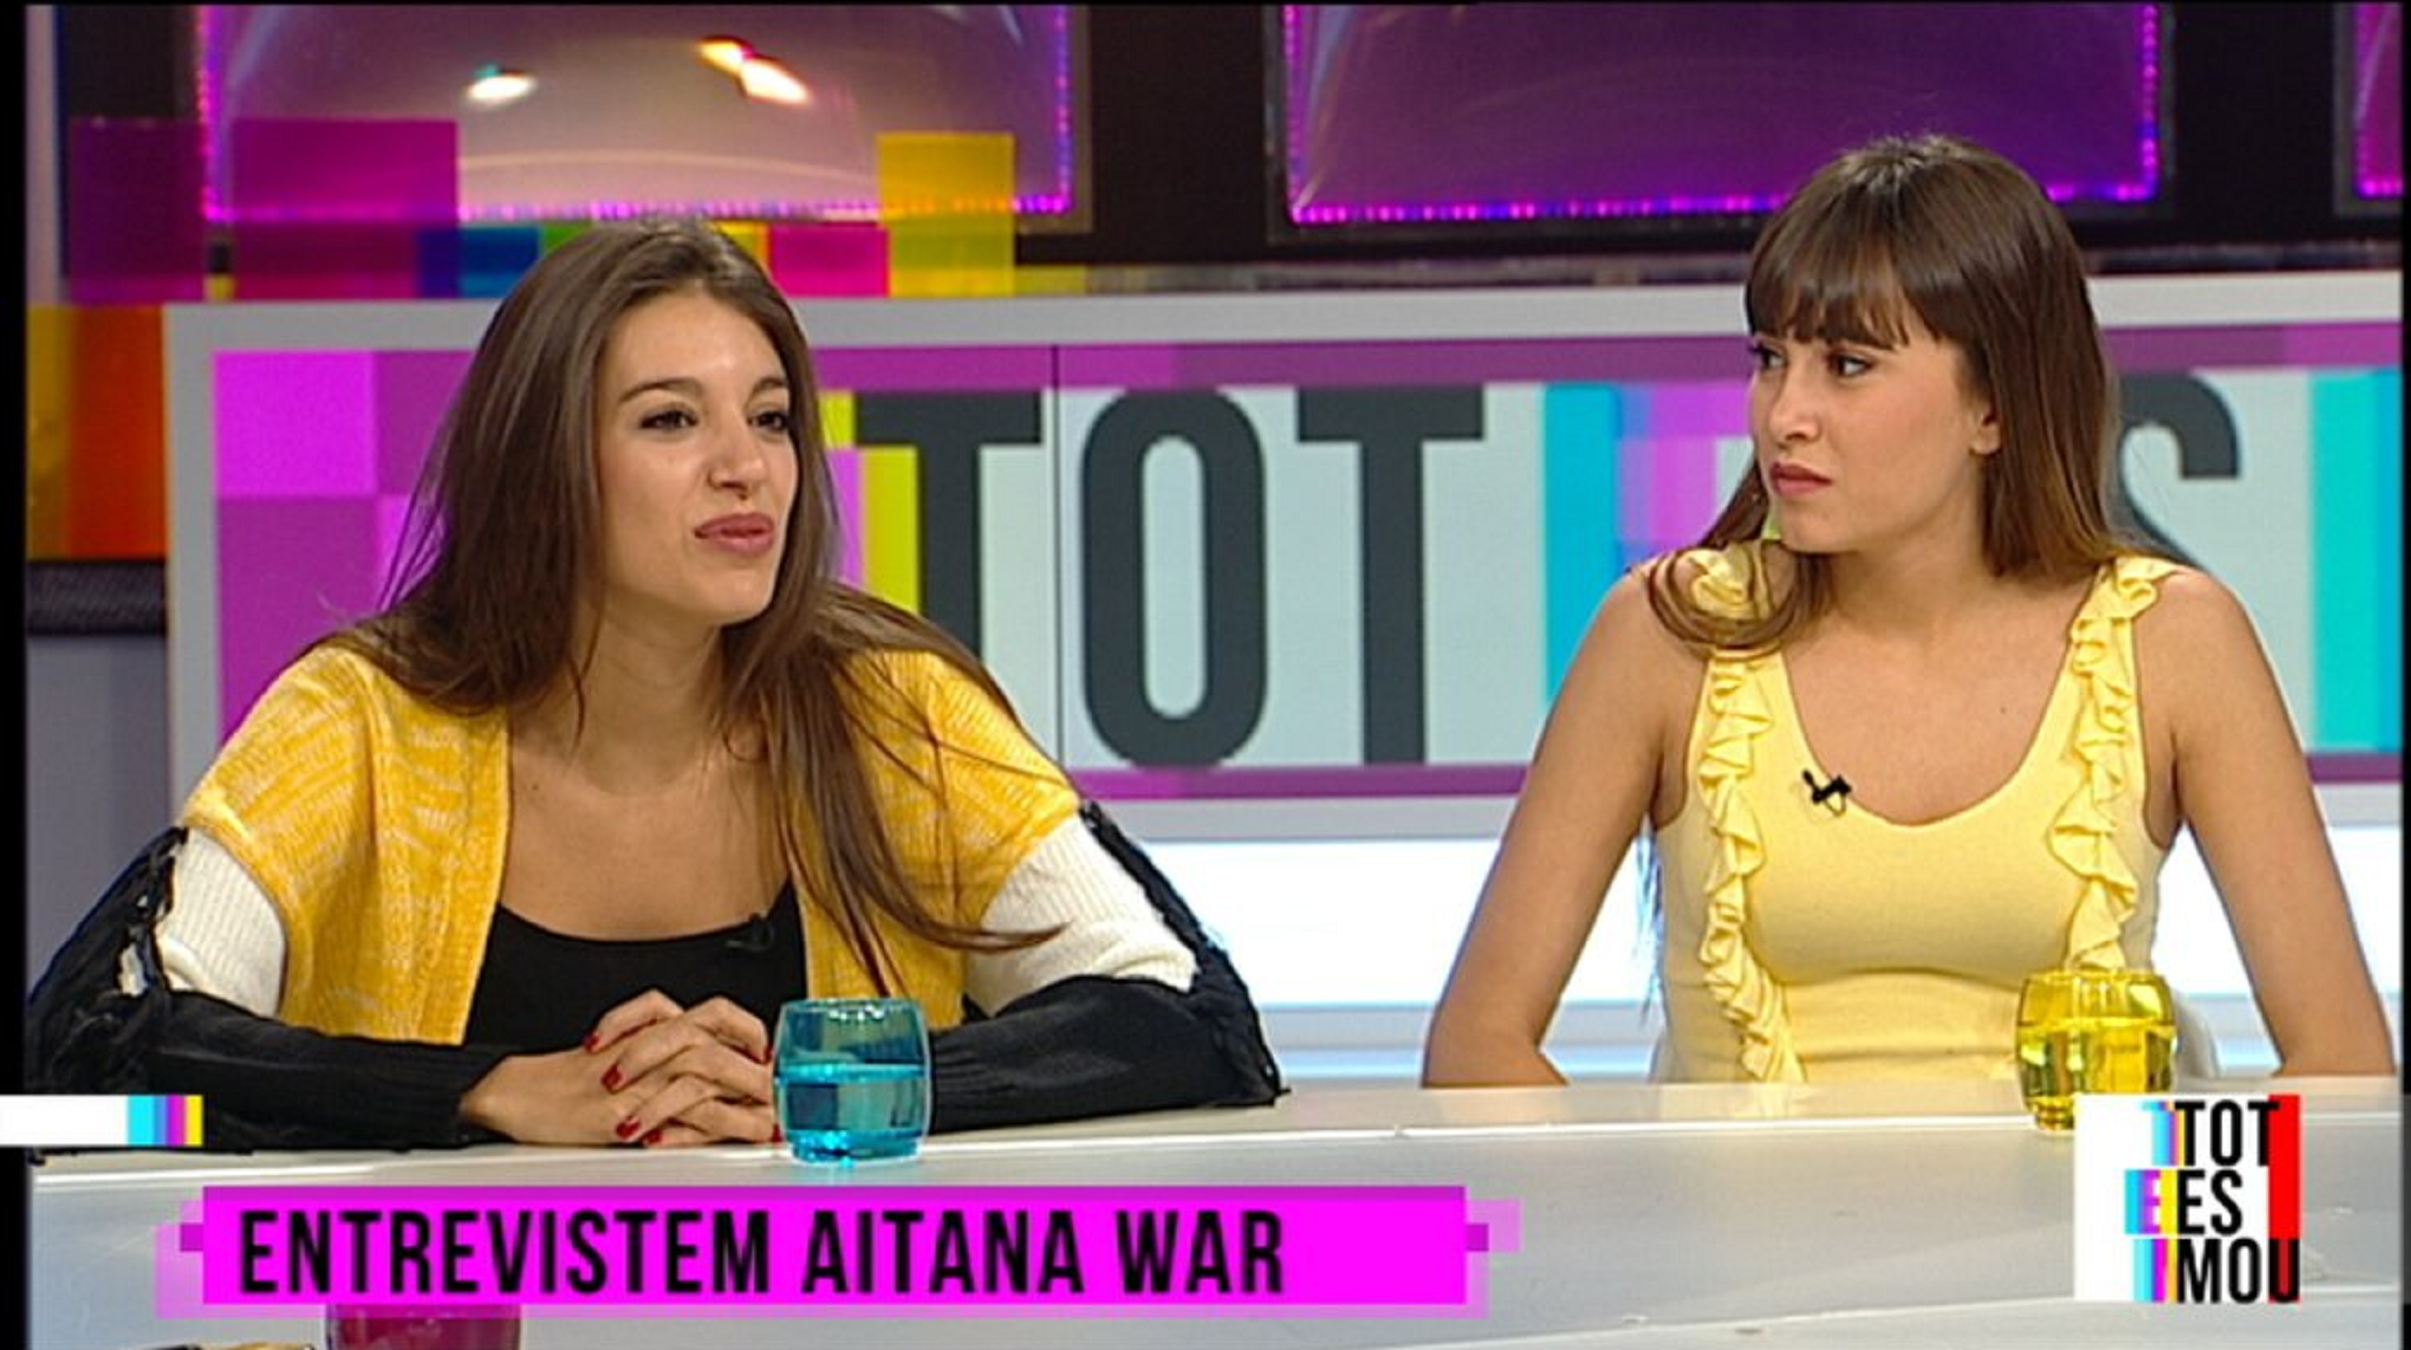 Aitana War de OT, de amarillo en TV3: "Iré de amarillo cuando me dé la gana"